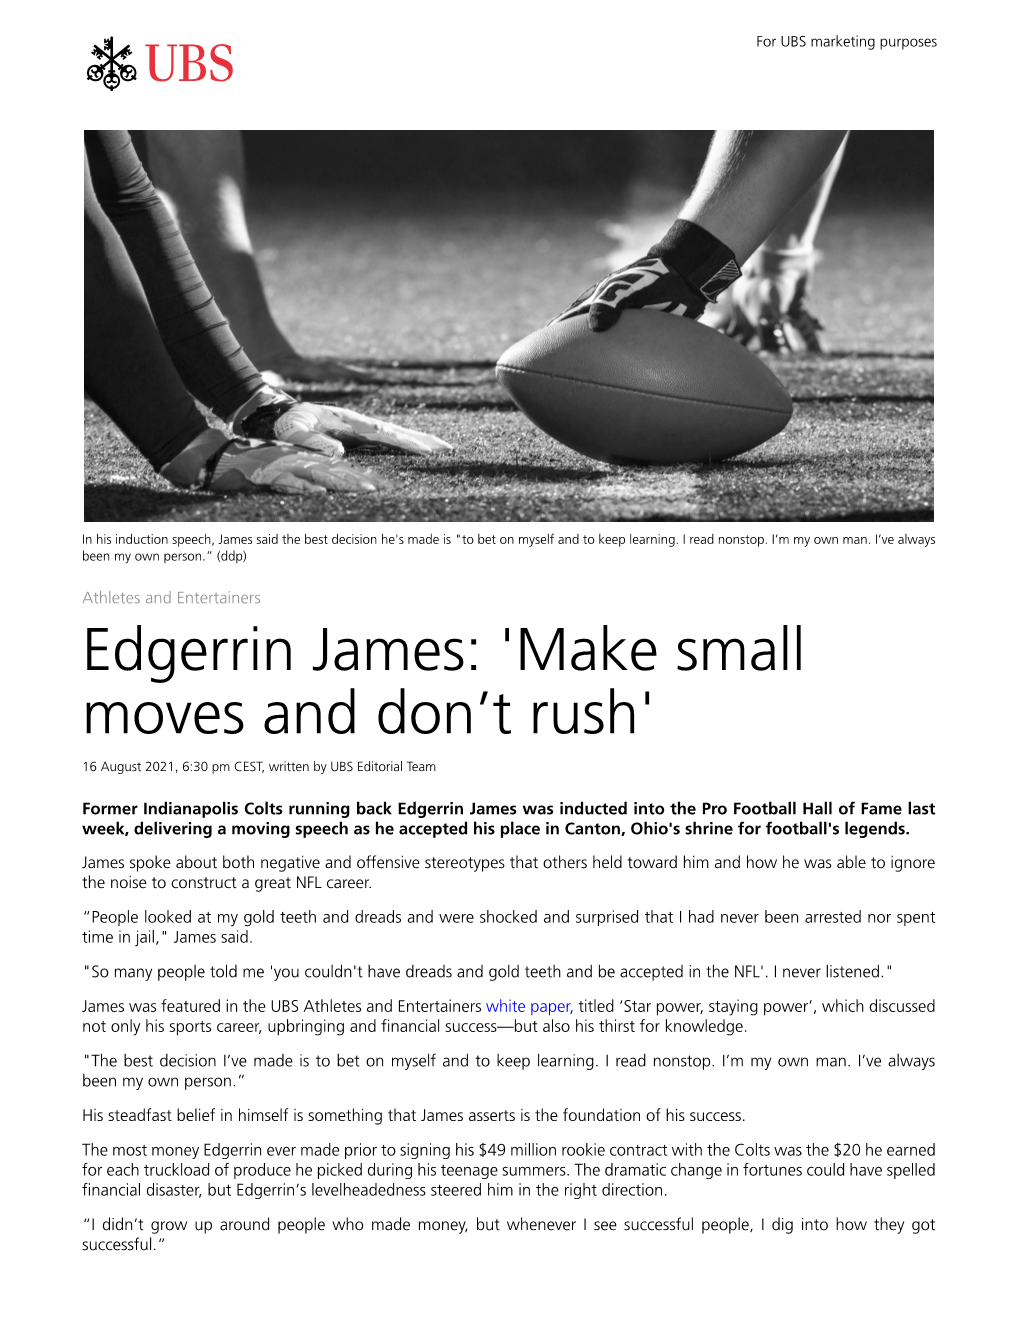 Edgerrin James: 'Make Small Moves and Don't Rush'